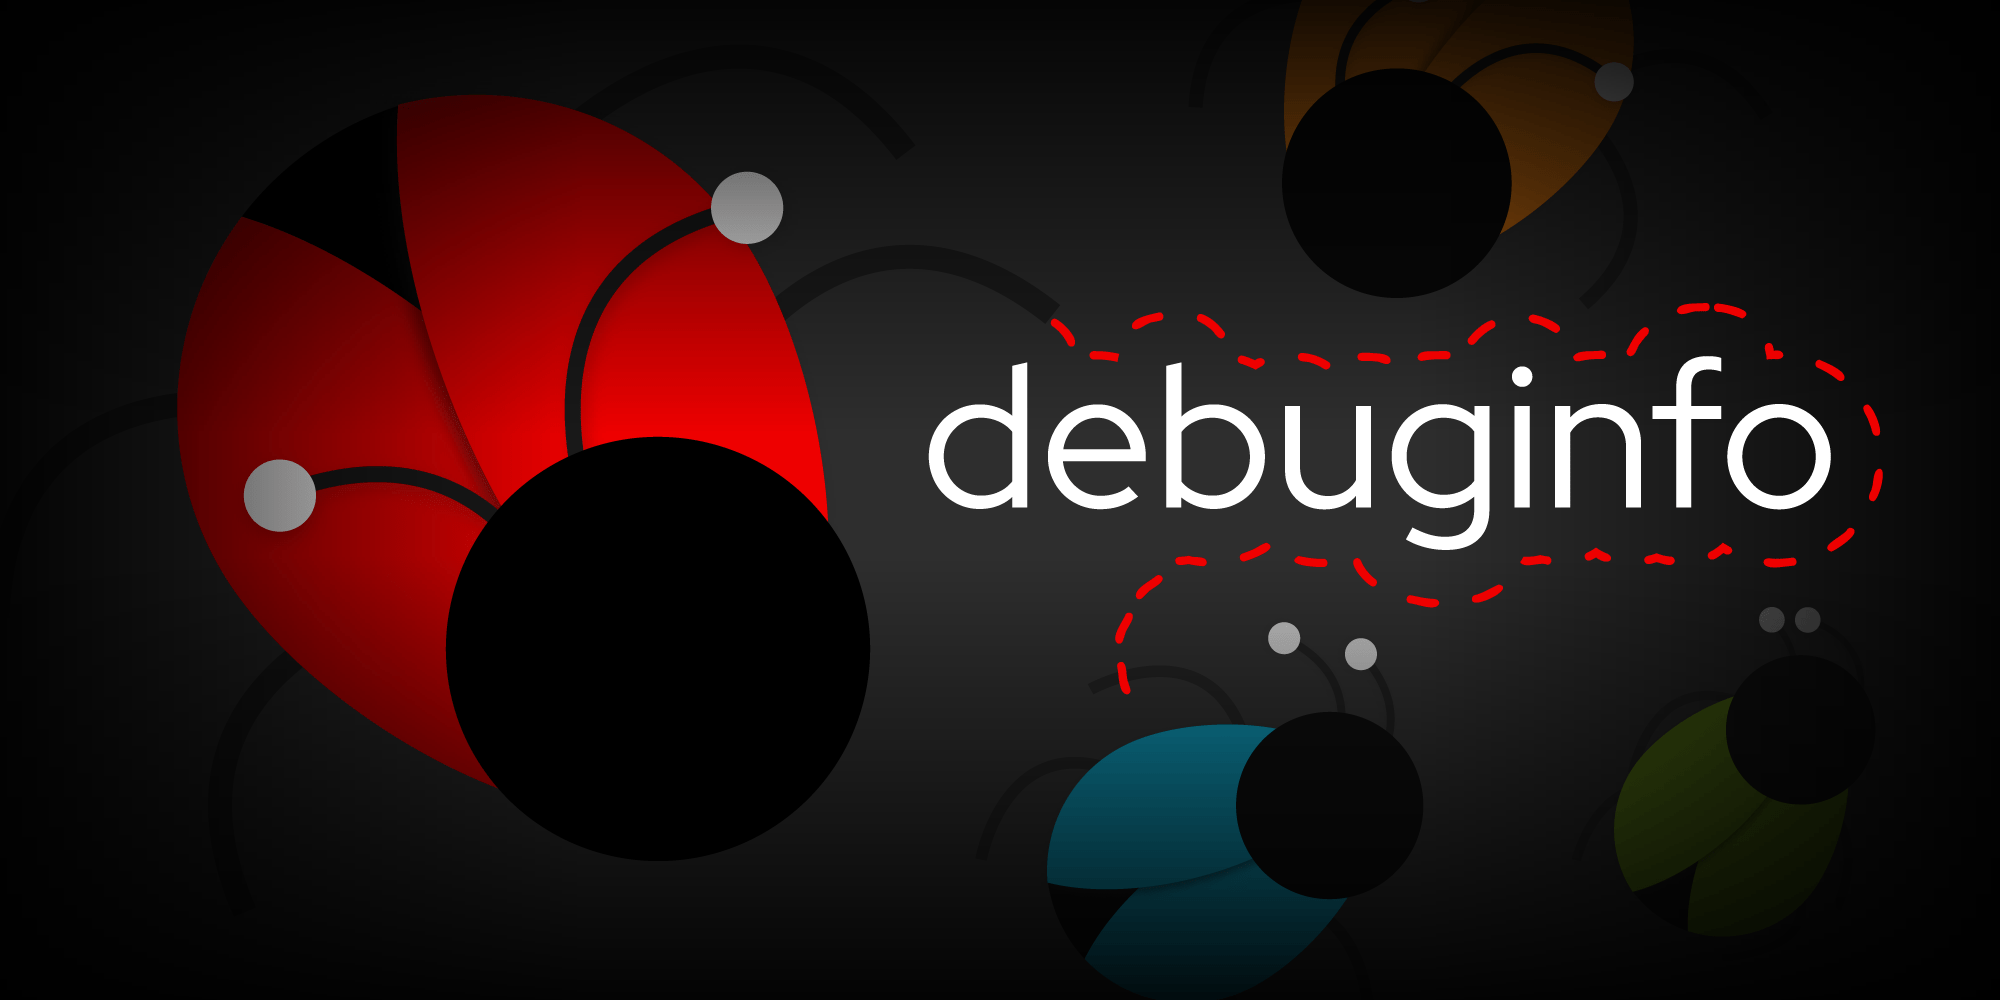 Debuginfo is not just for debugging programs